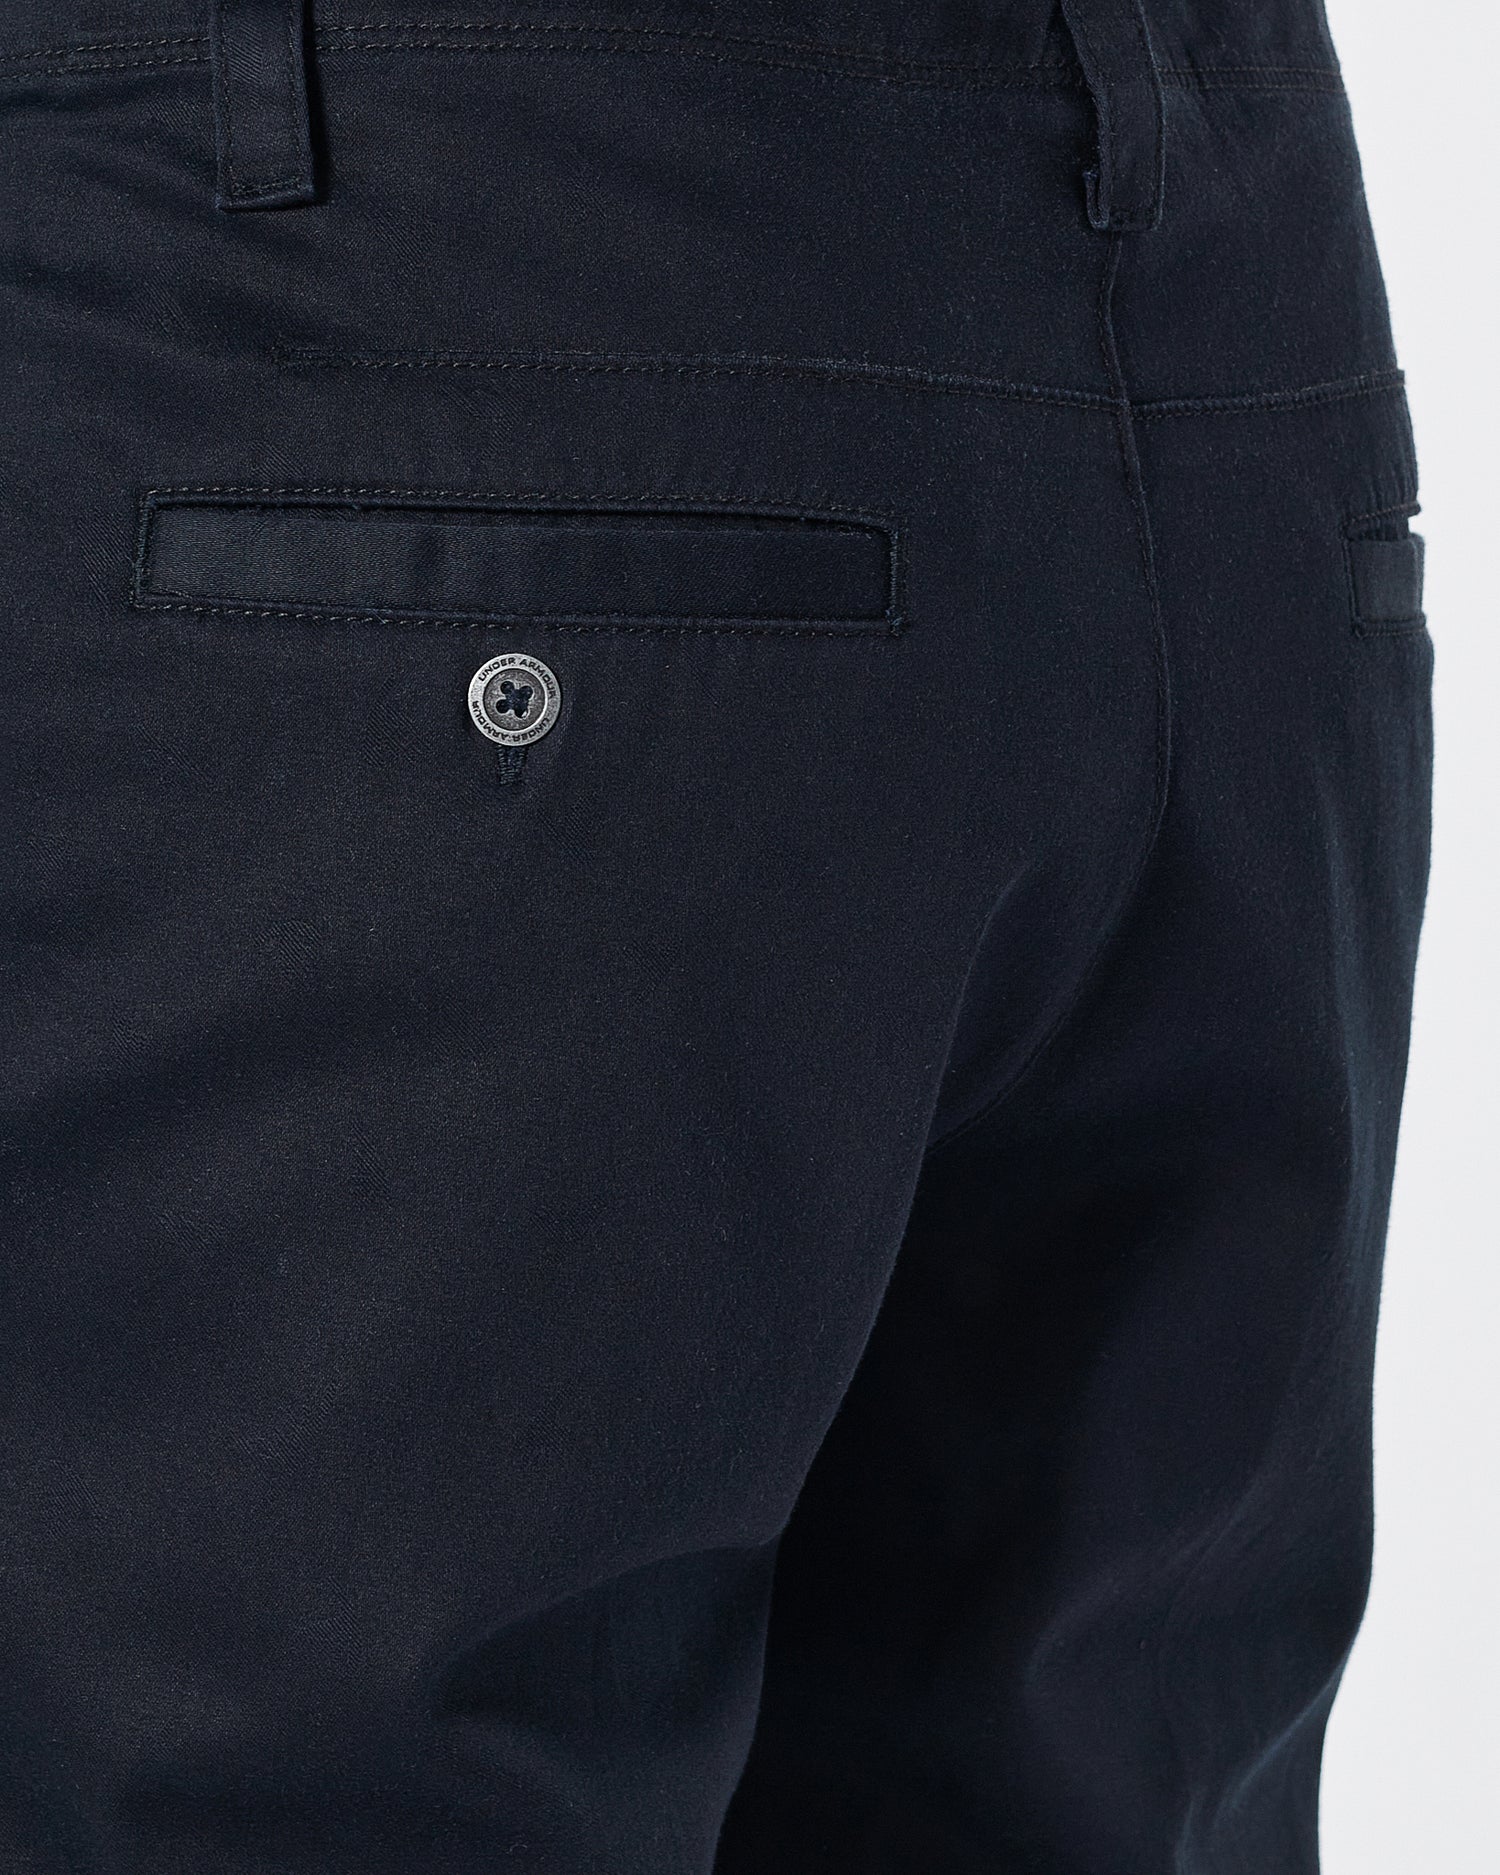 UA Dark Blue Men Short Pants 18.50